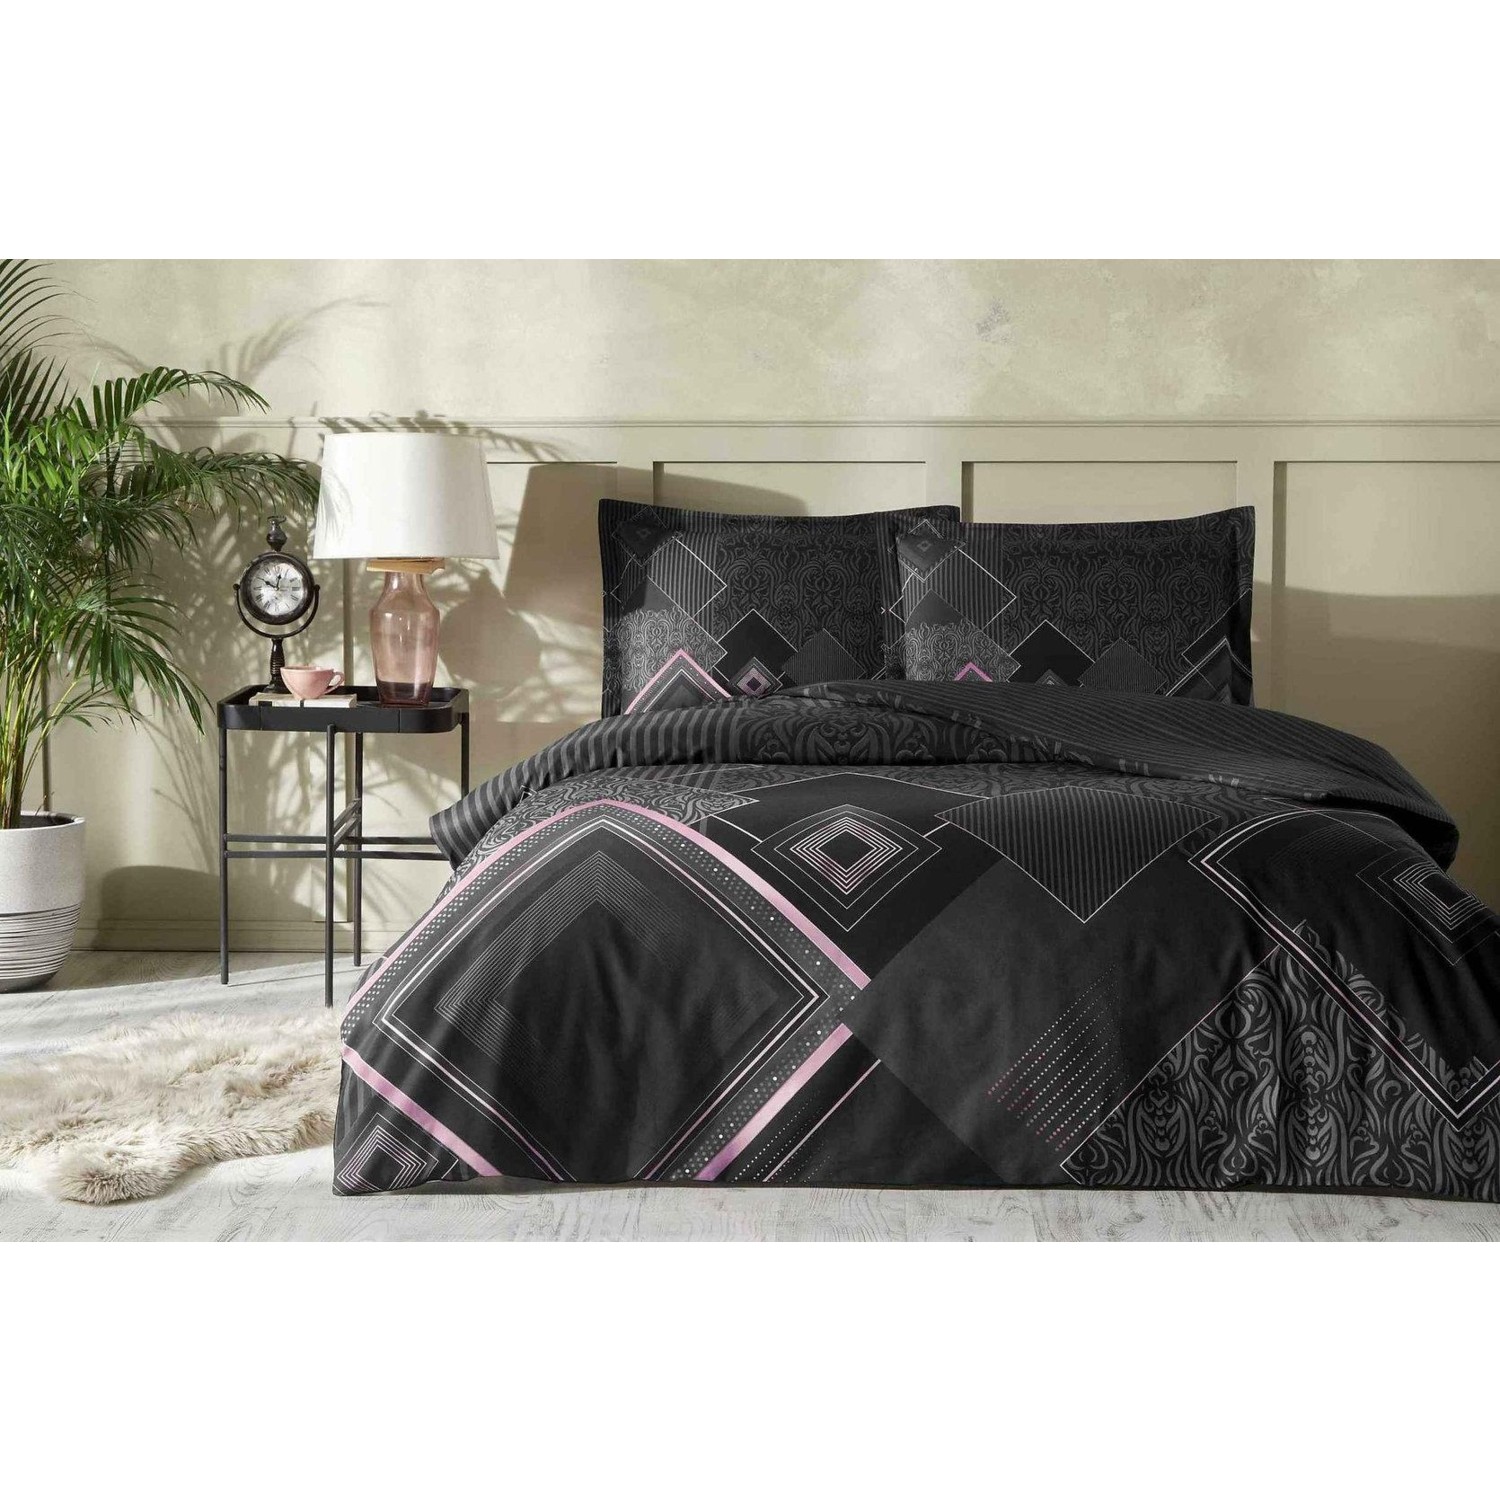 Комплект постельного белья Ozdilek Snazzy Black Pink King Size grima siyah cilt terlik